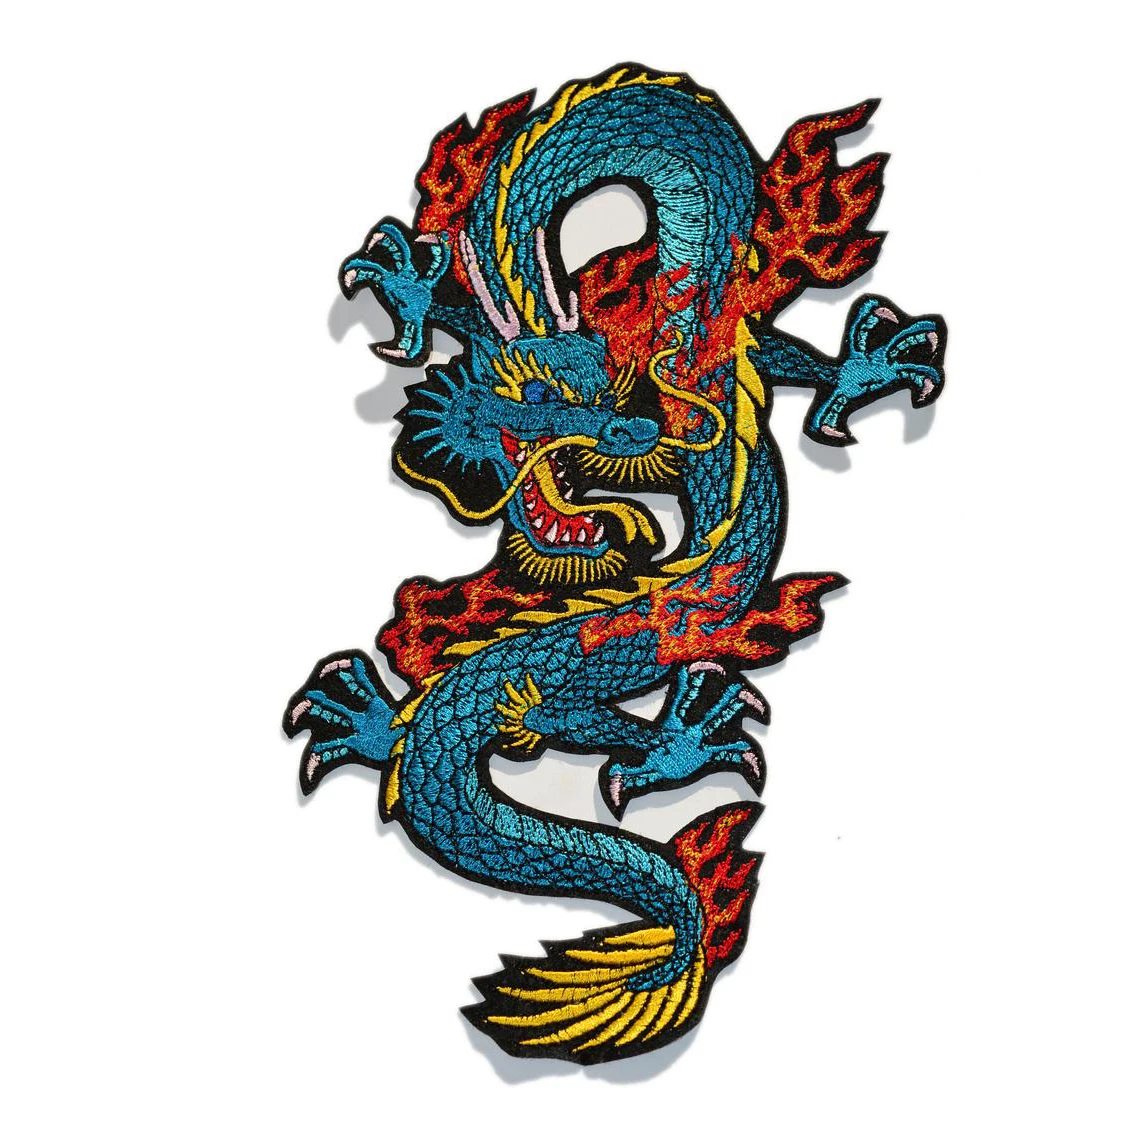 Chinese Dragon Sew On Patch 21cm x 13cm Motif Badge Applique Badges Patches P411 